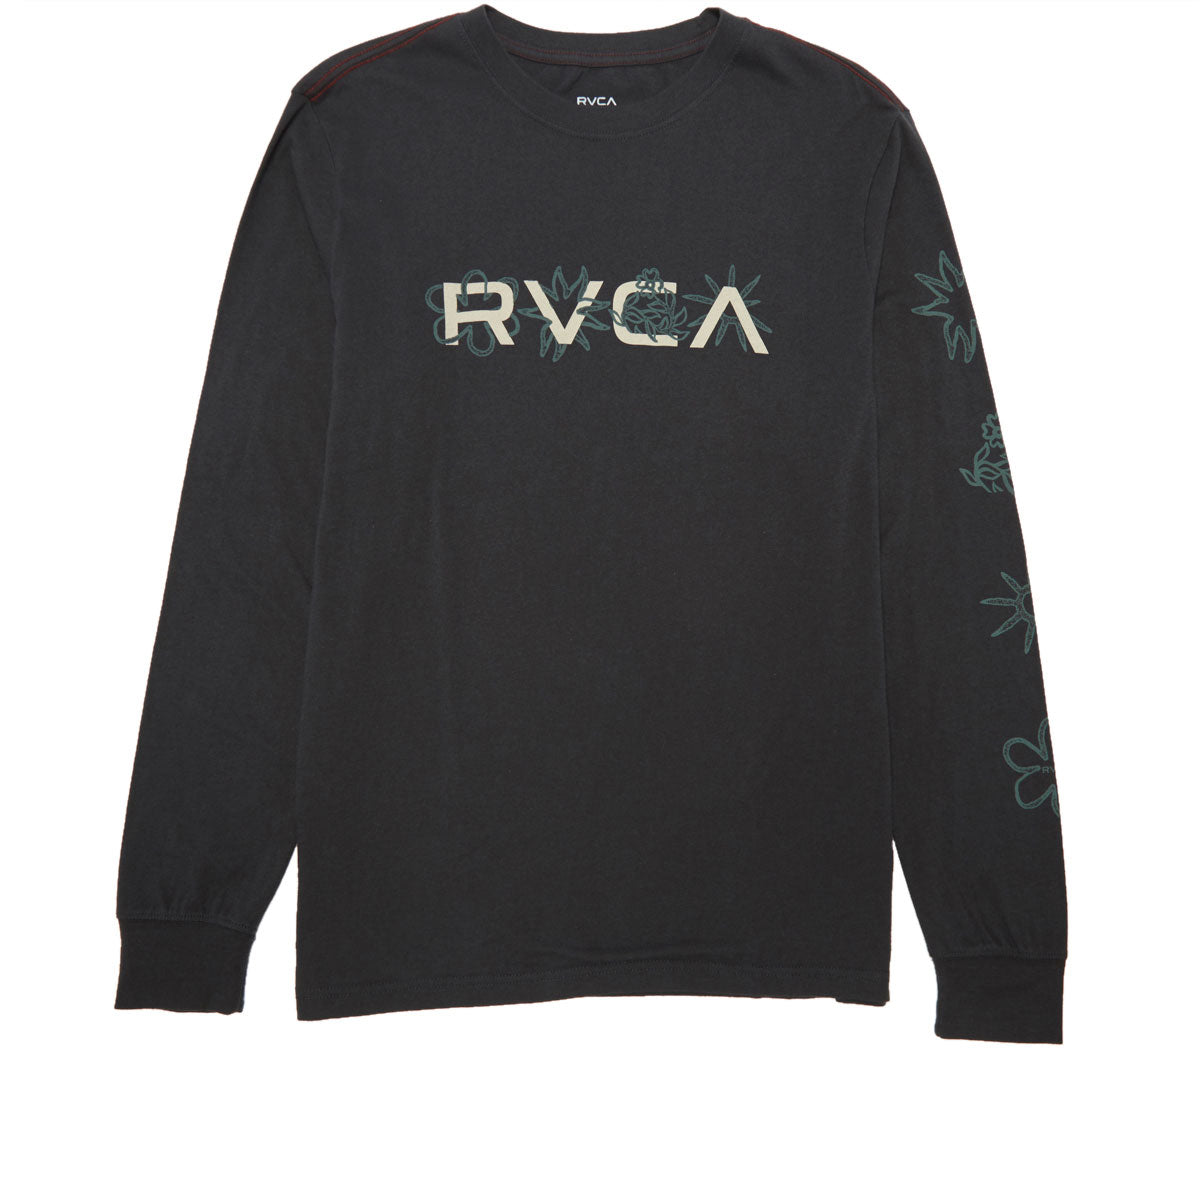 RVCA Big Bloom Long Sleeve T-Shirt - Pirate Black image 1